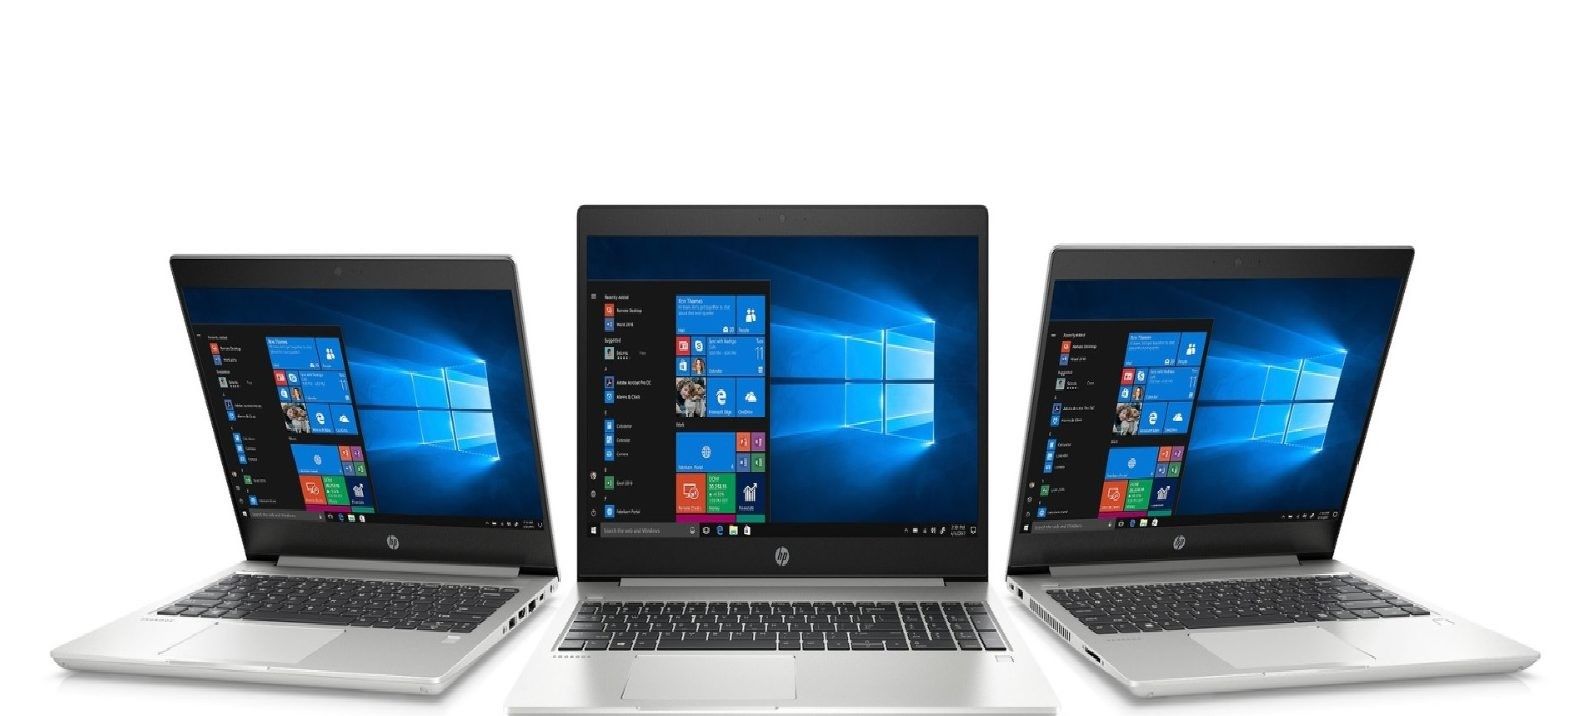 HP ProBook 430, 440, 450 G6 Notebook Review: Bra val för proffs